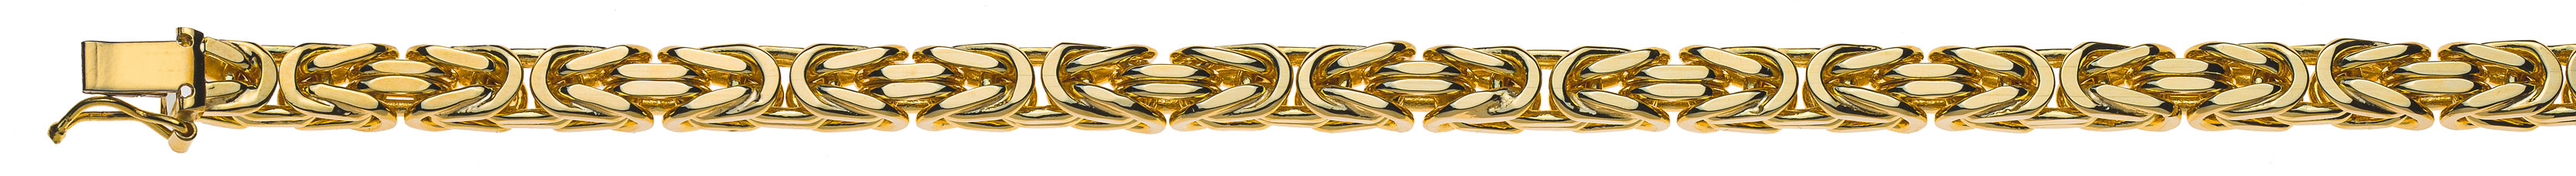 AURONOS Prestige Necklace yellow gold 18K king chain 60cm 5mm